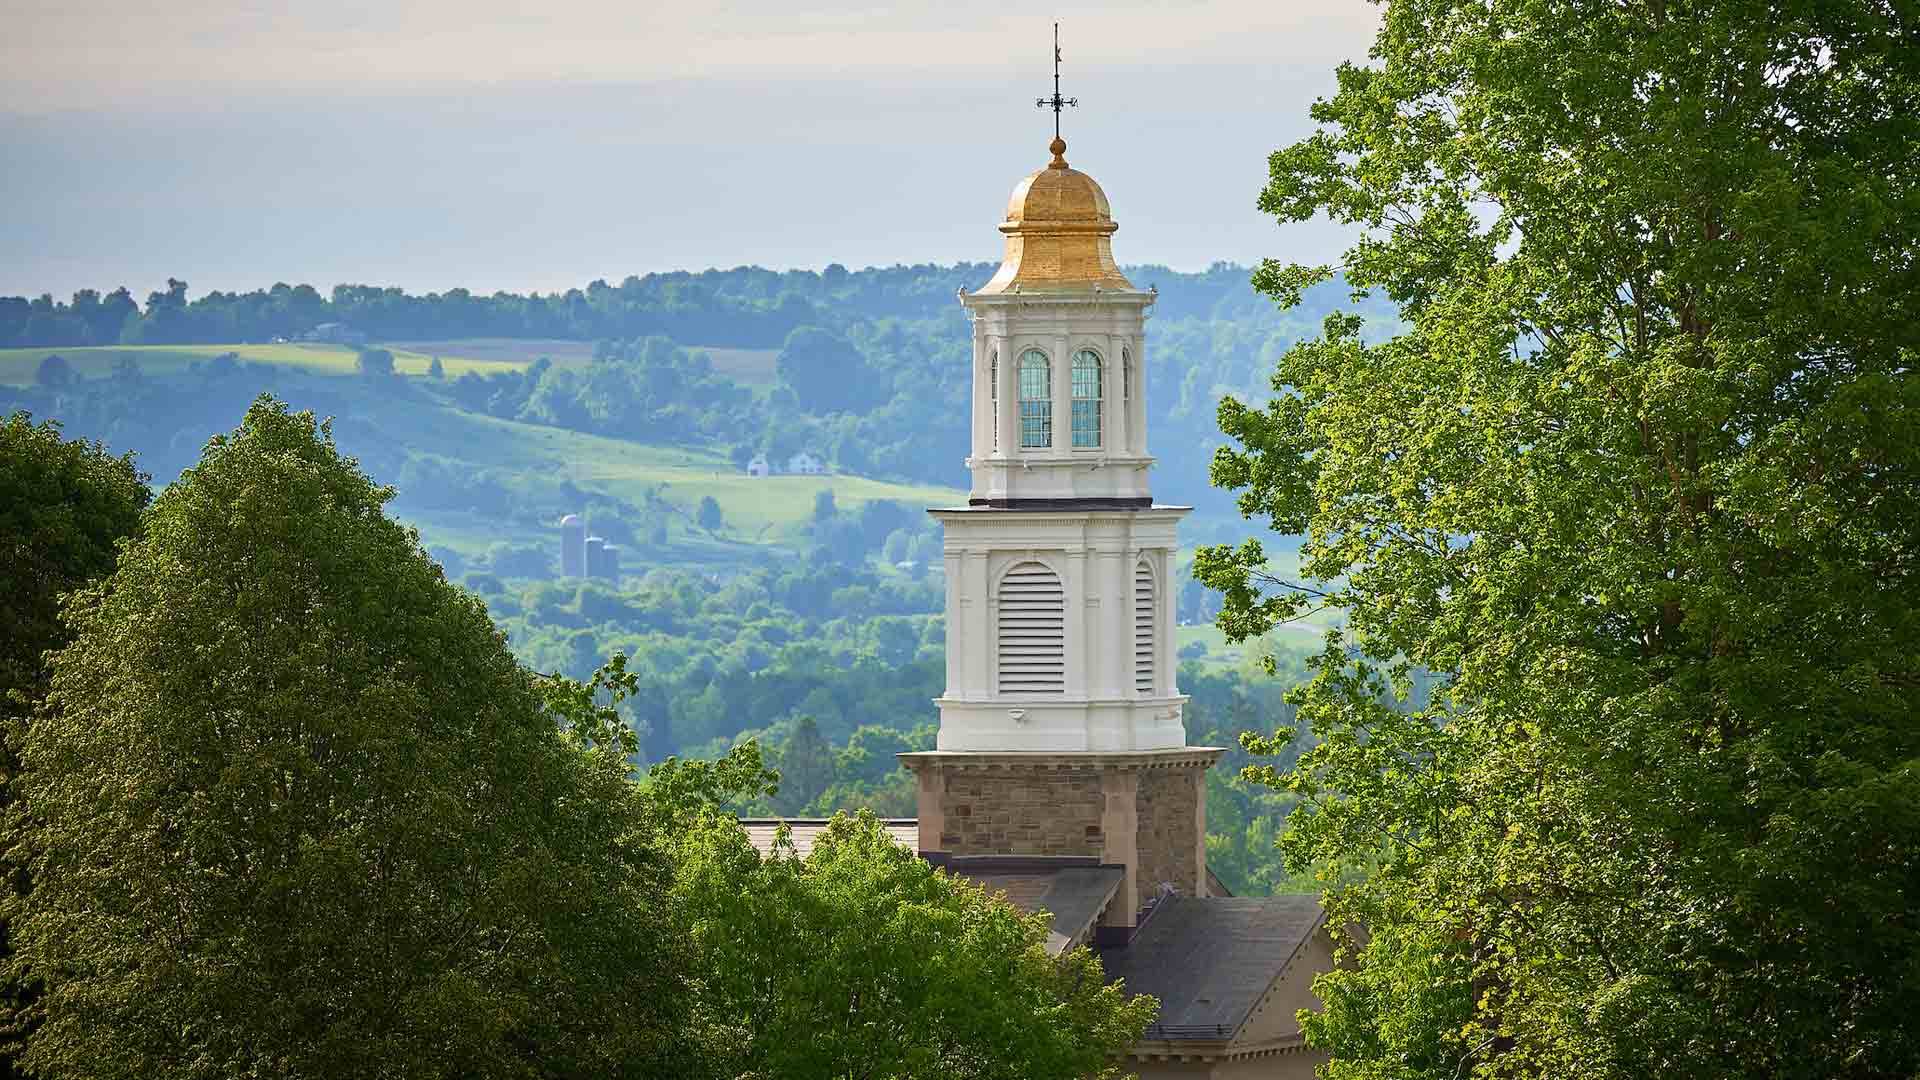 ɫTV University Memorial Chapel rises above the trees.